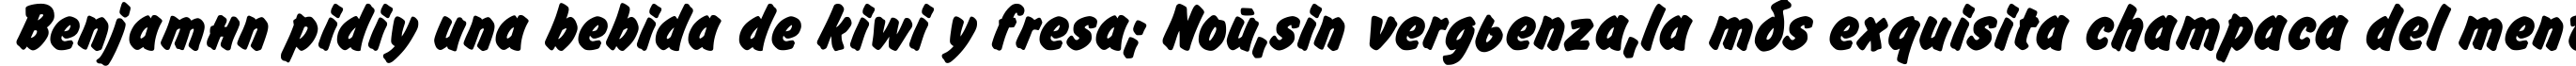 Пример написания шрифтом FlashRomanBold_DG текста на испанском